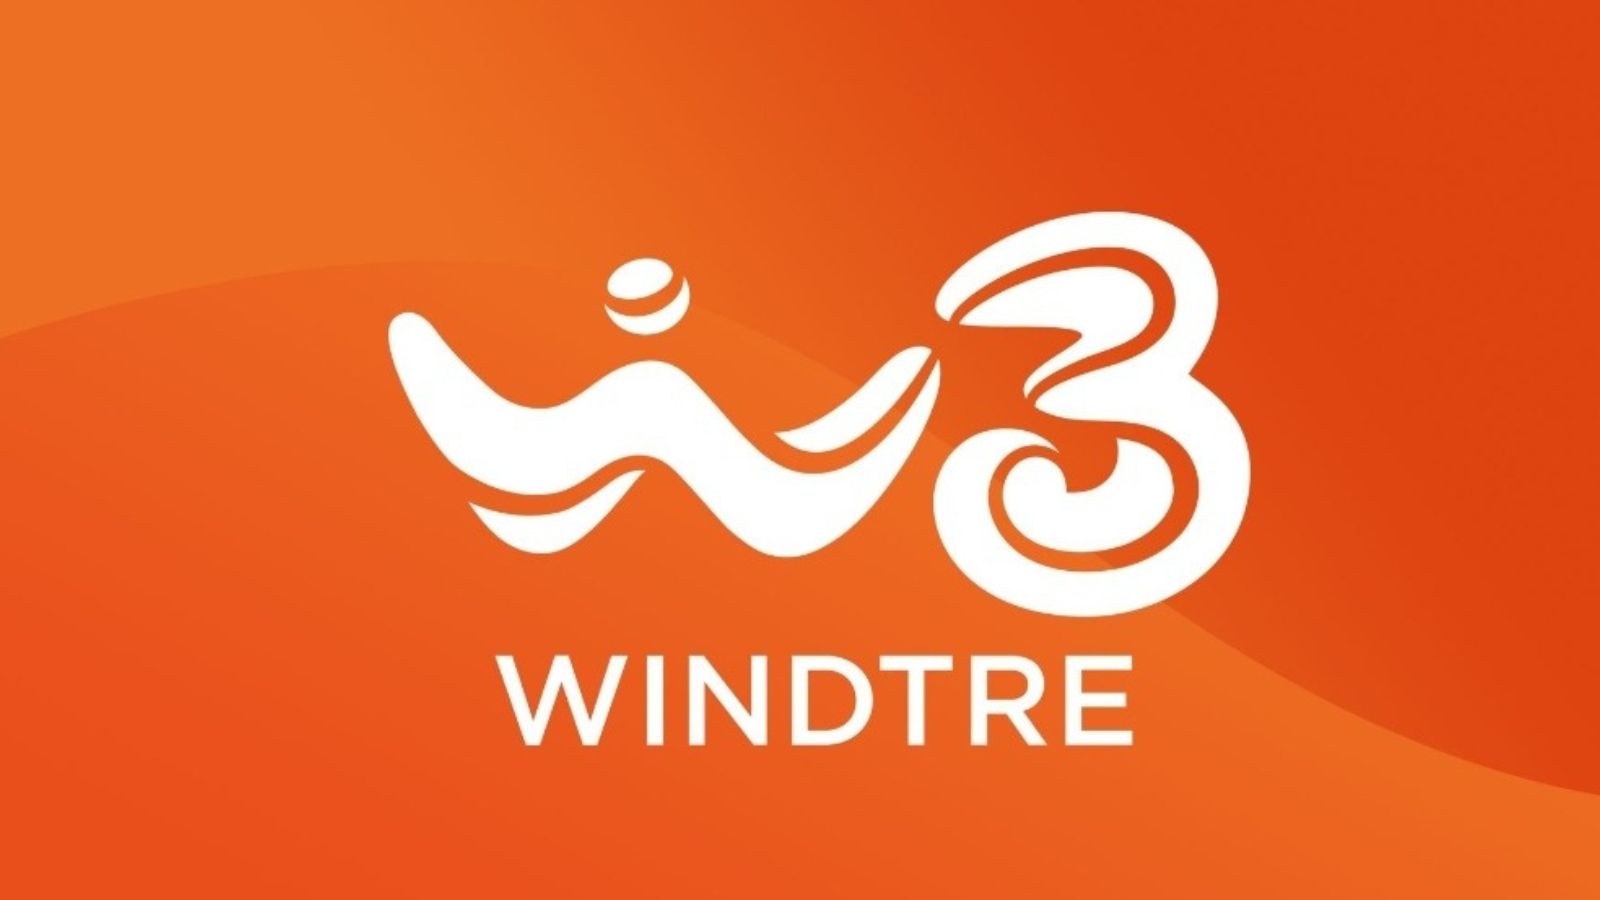 WindTre smartphone offerte